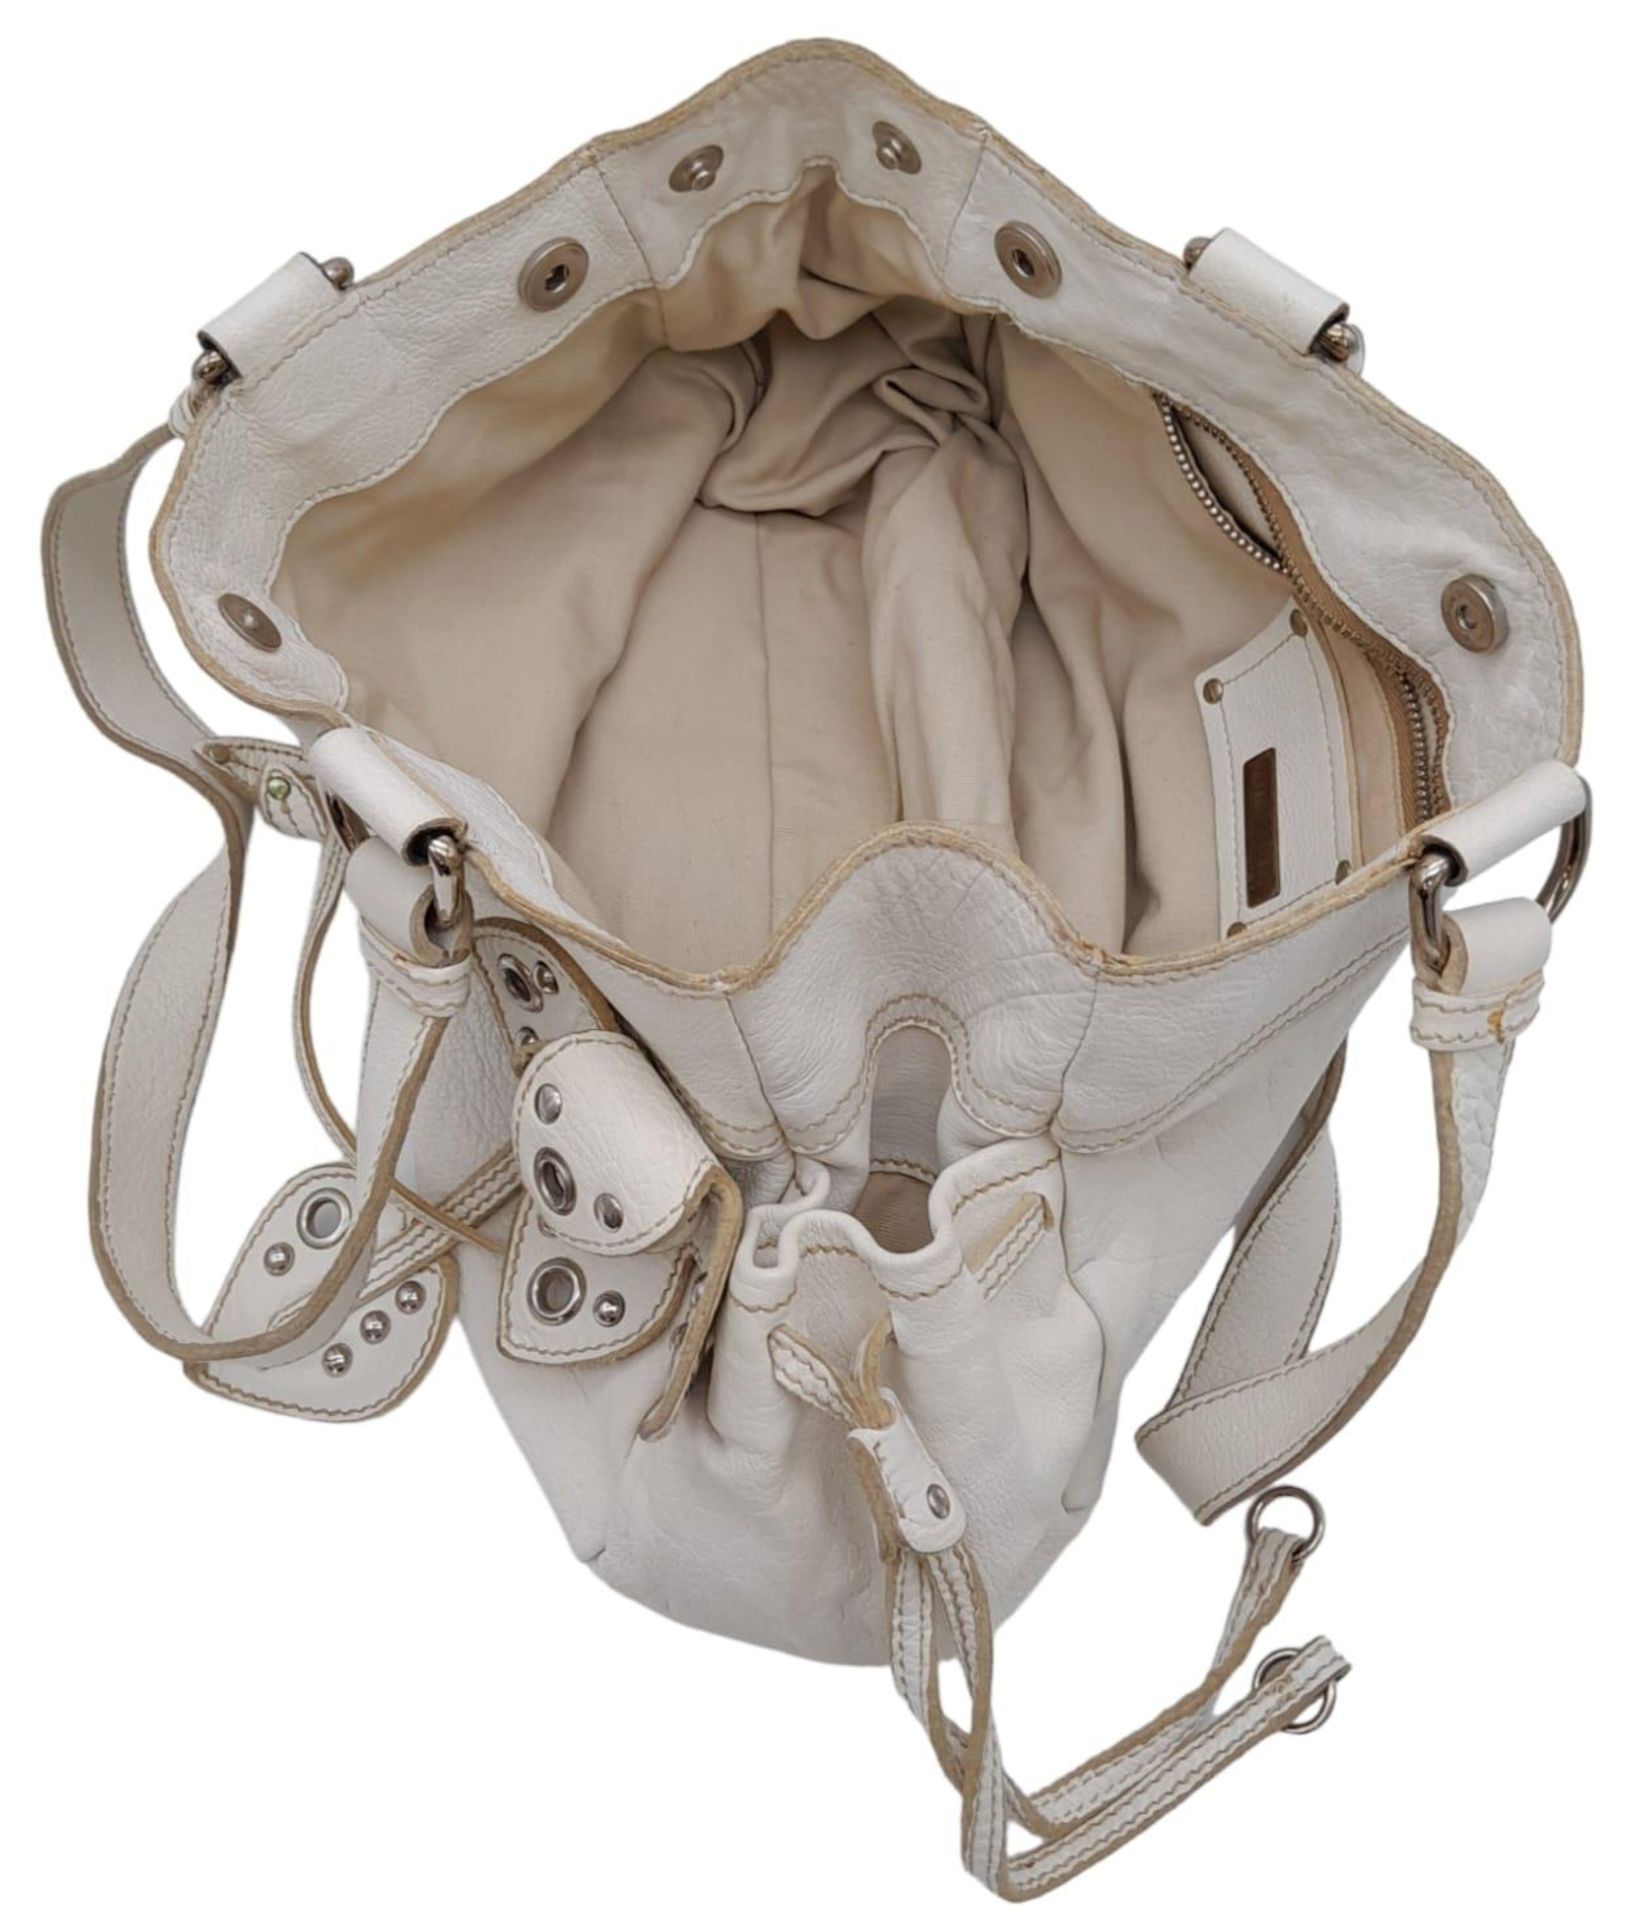 A Miu Miu White Leather Handbag. Ruffled white leather exterior with zipped pocket. Silver-tone - Image 6 of 8